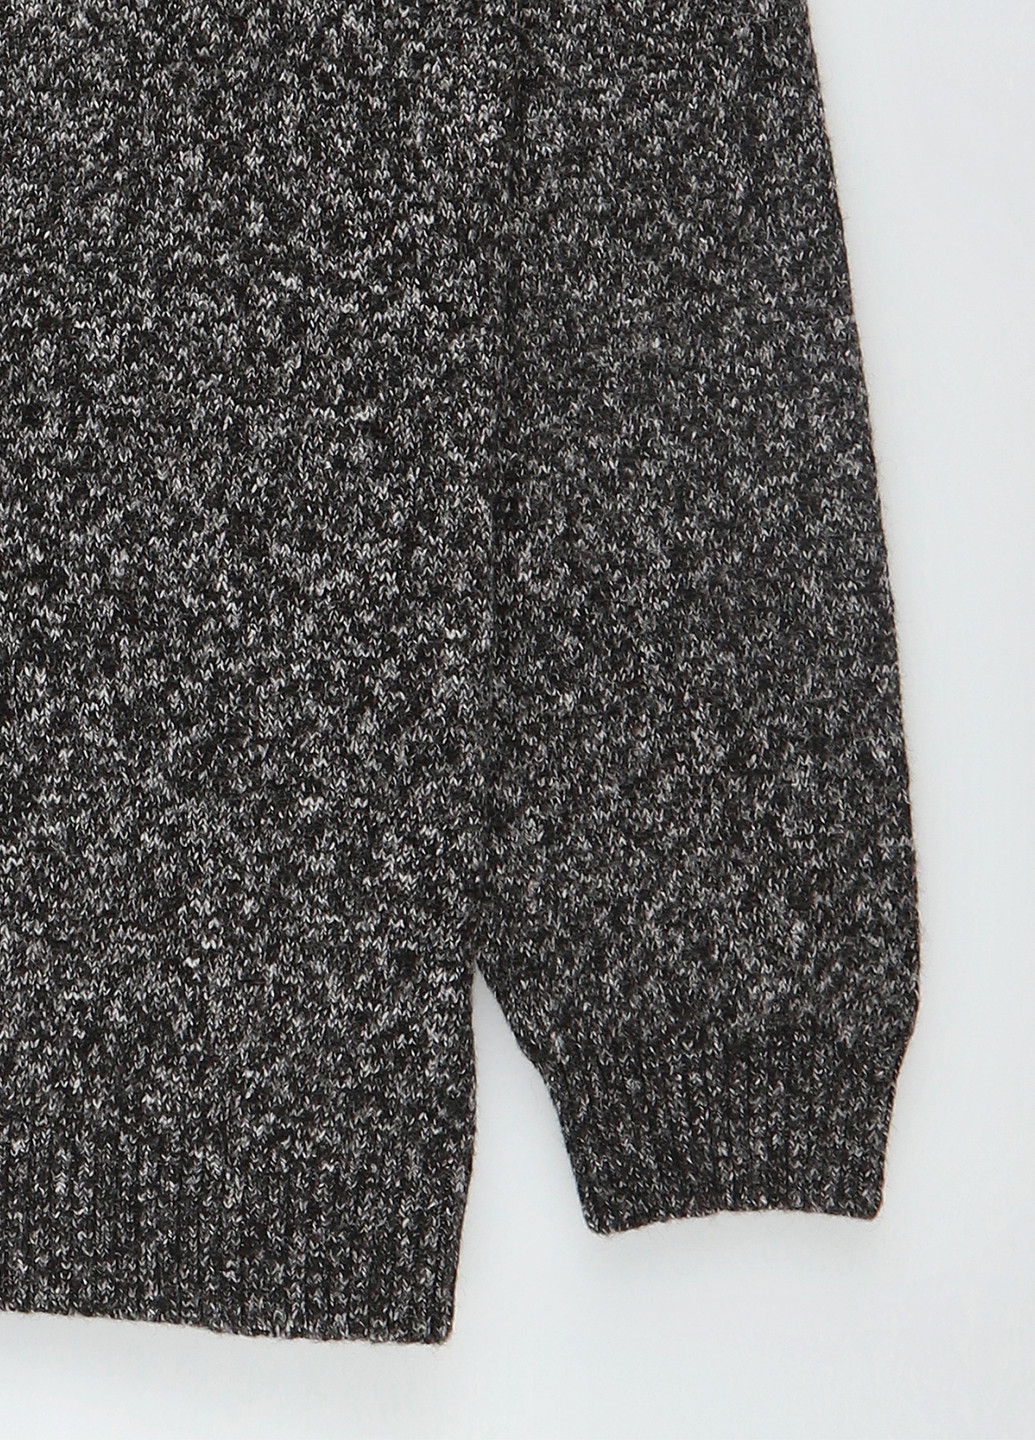 Темно-серый зимний свитер джемпер C&A